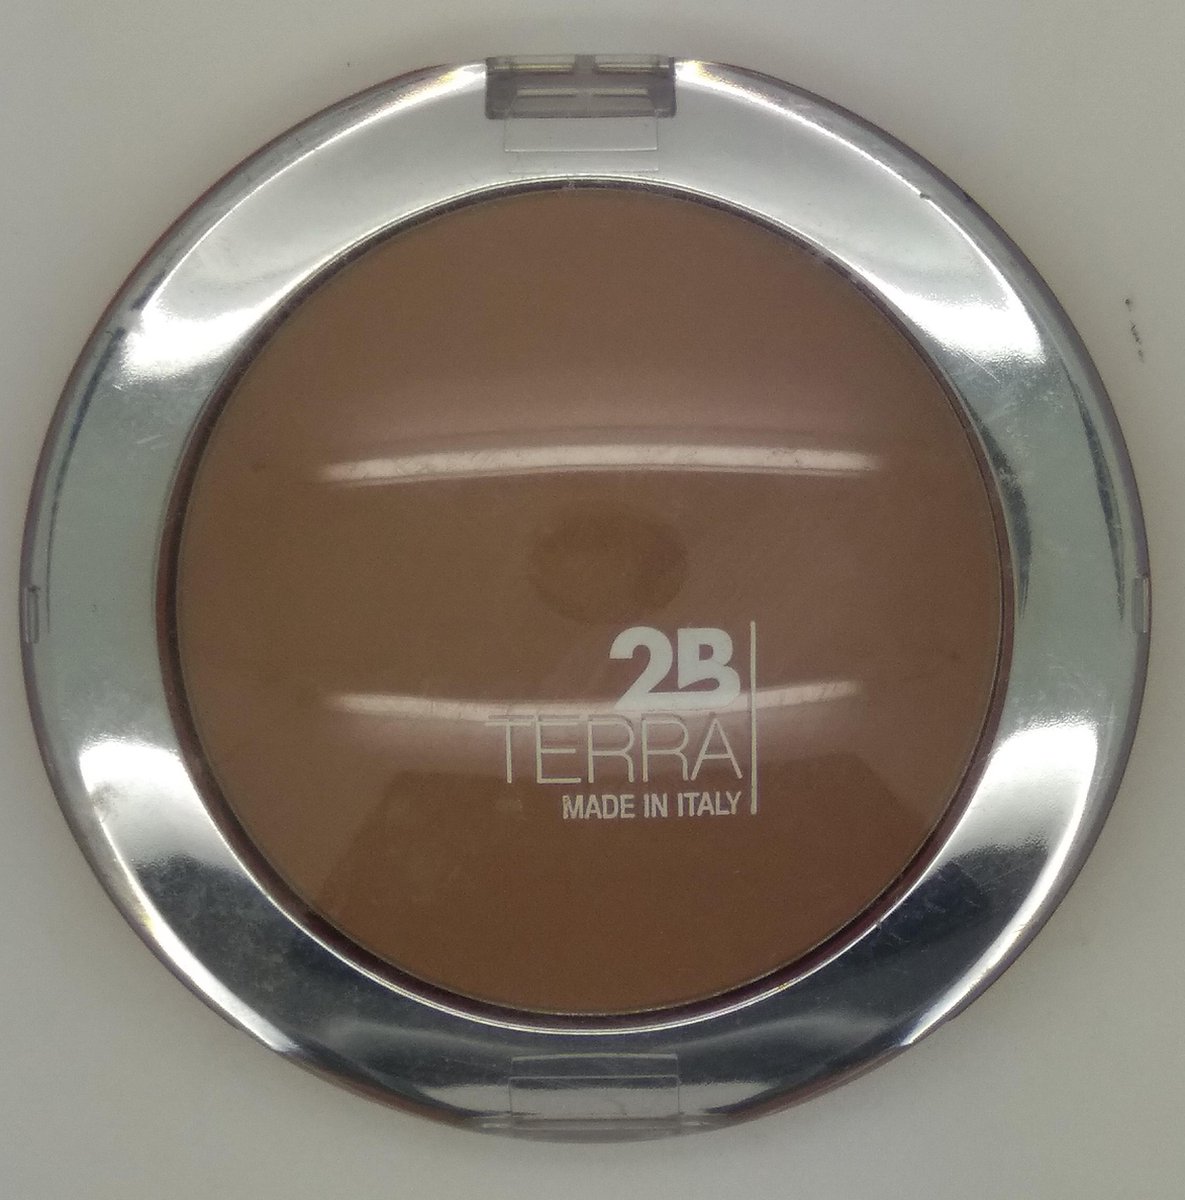 2B Poudre Terra Chrome 02 10,5gr - 2B